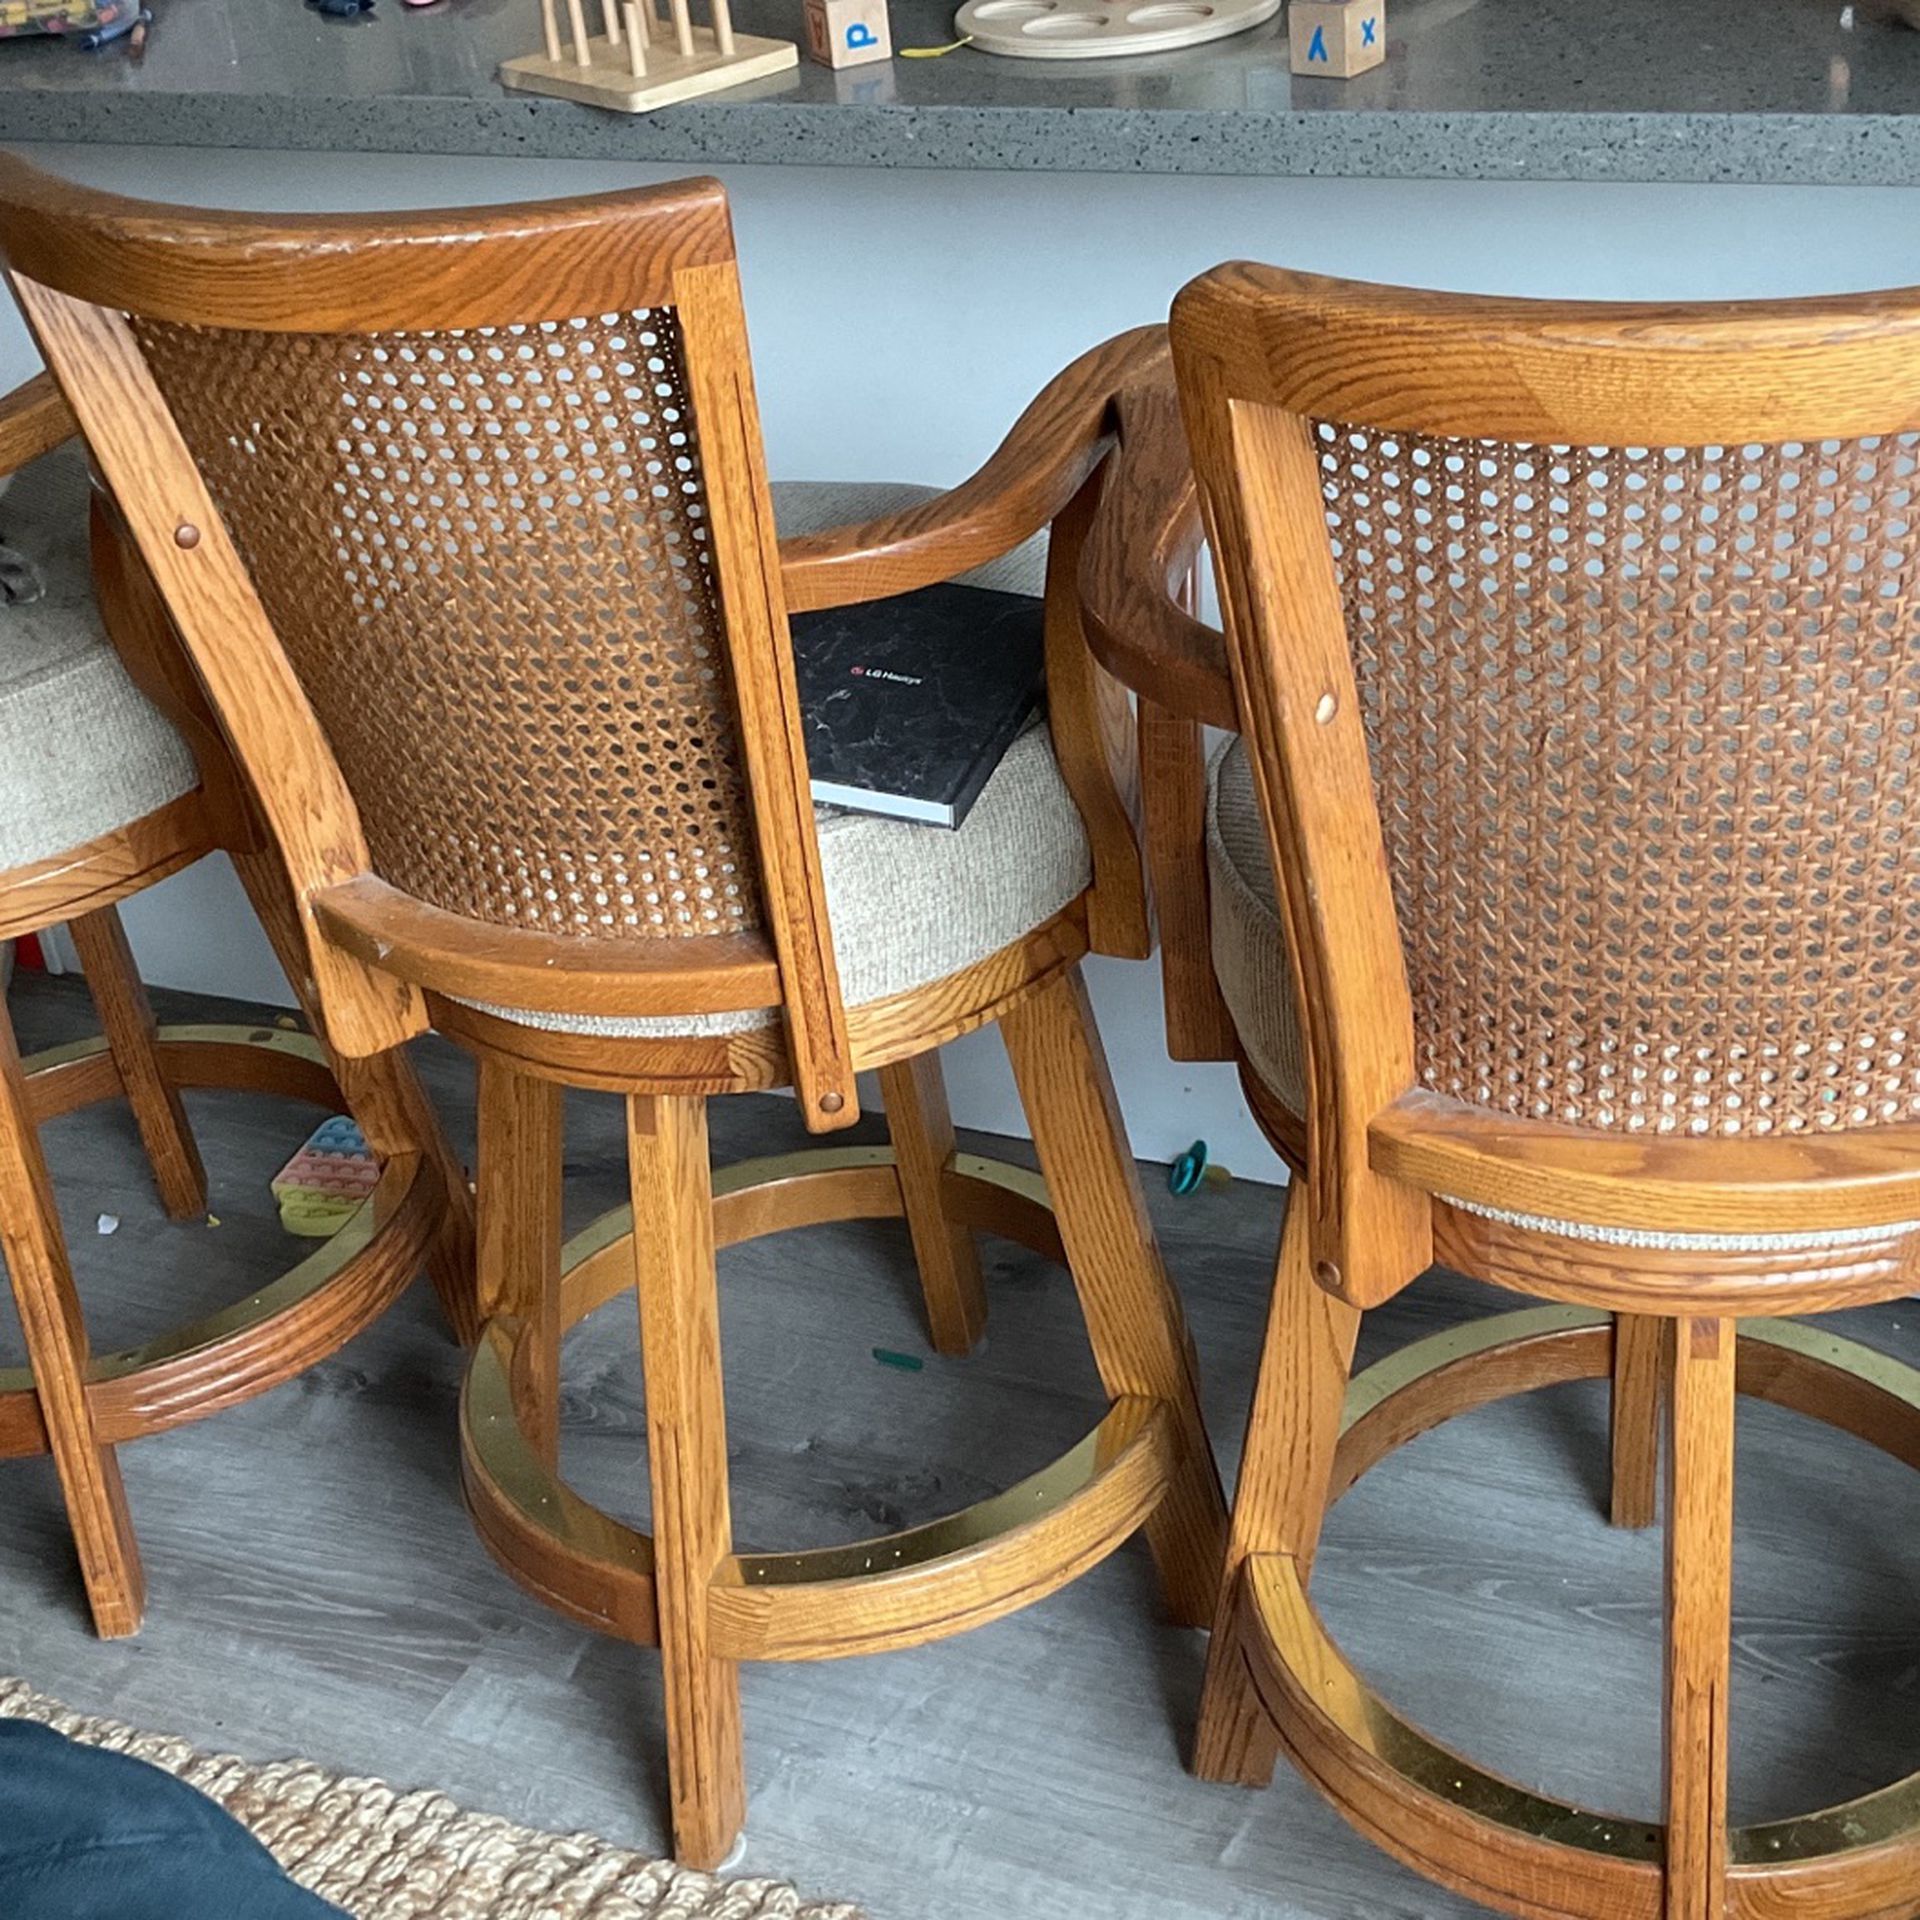 3 Cane Swivel Chairs